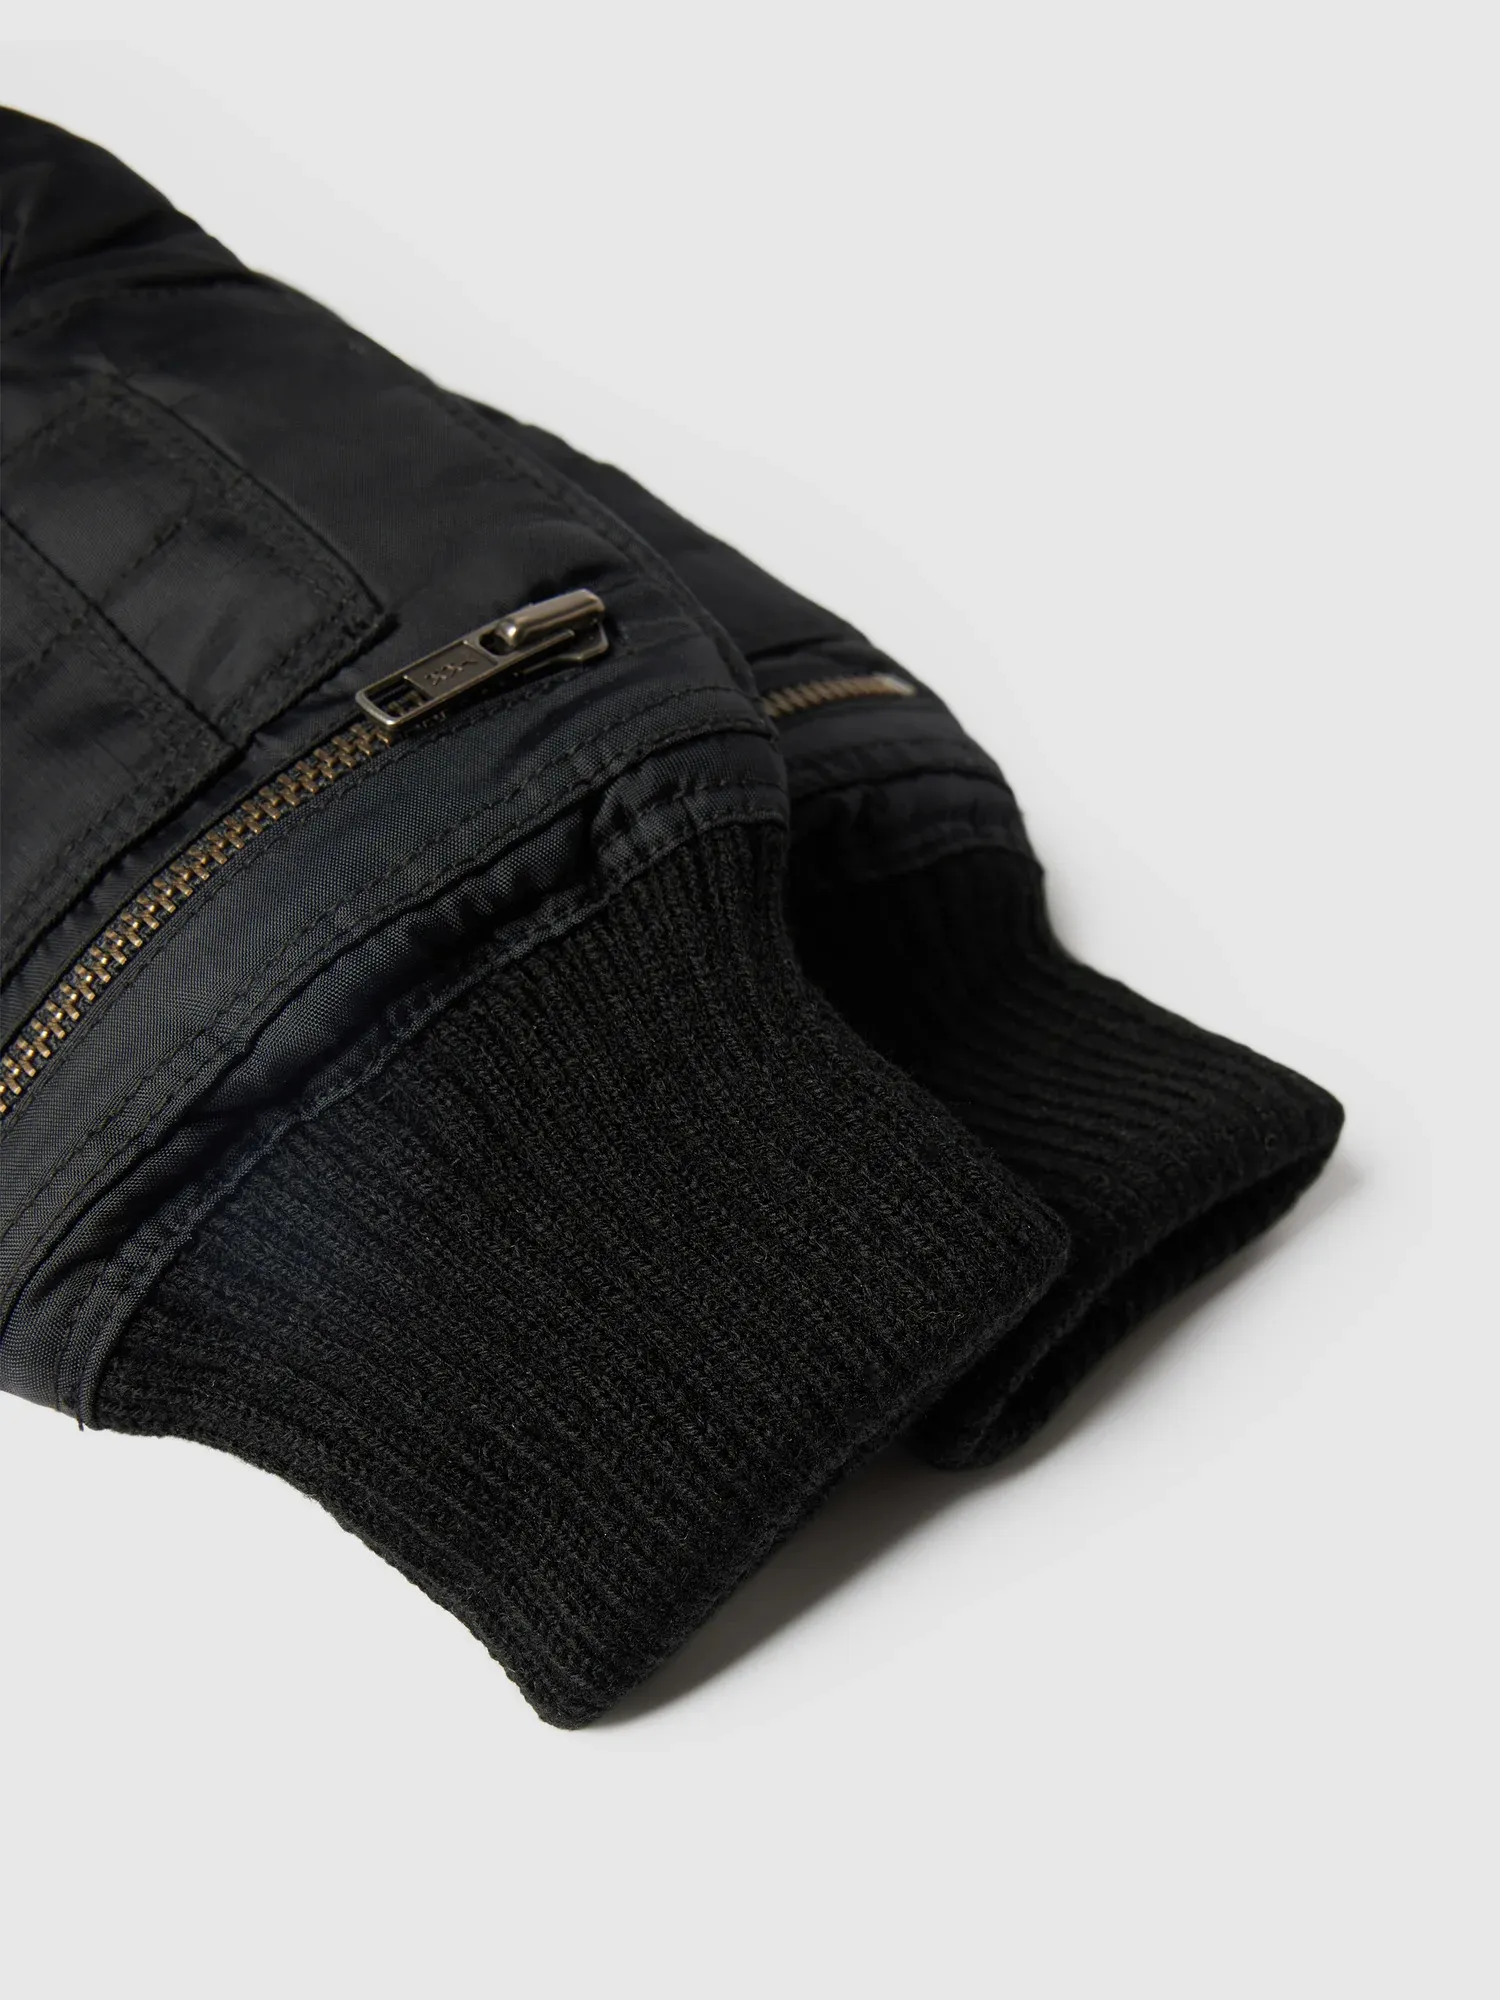 ALPHA INDUSTRIES MA-1 Gloves | Black - Choice+Attitude